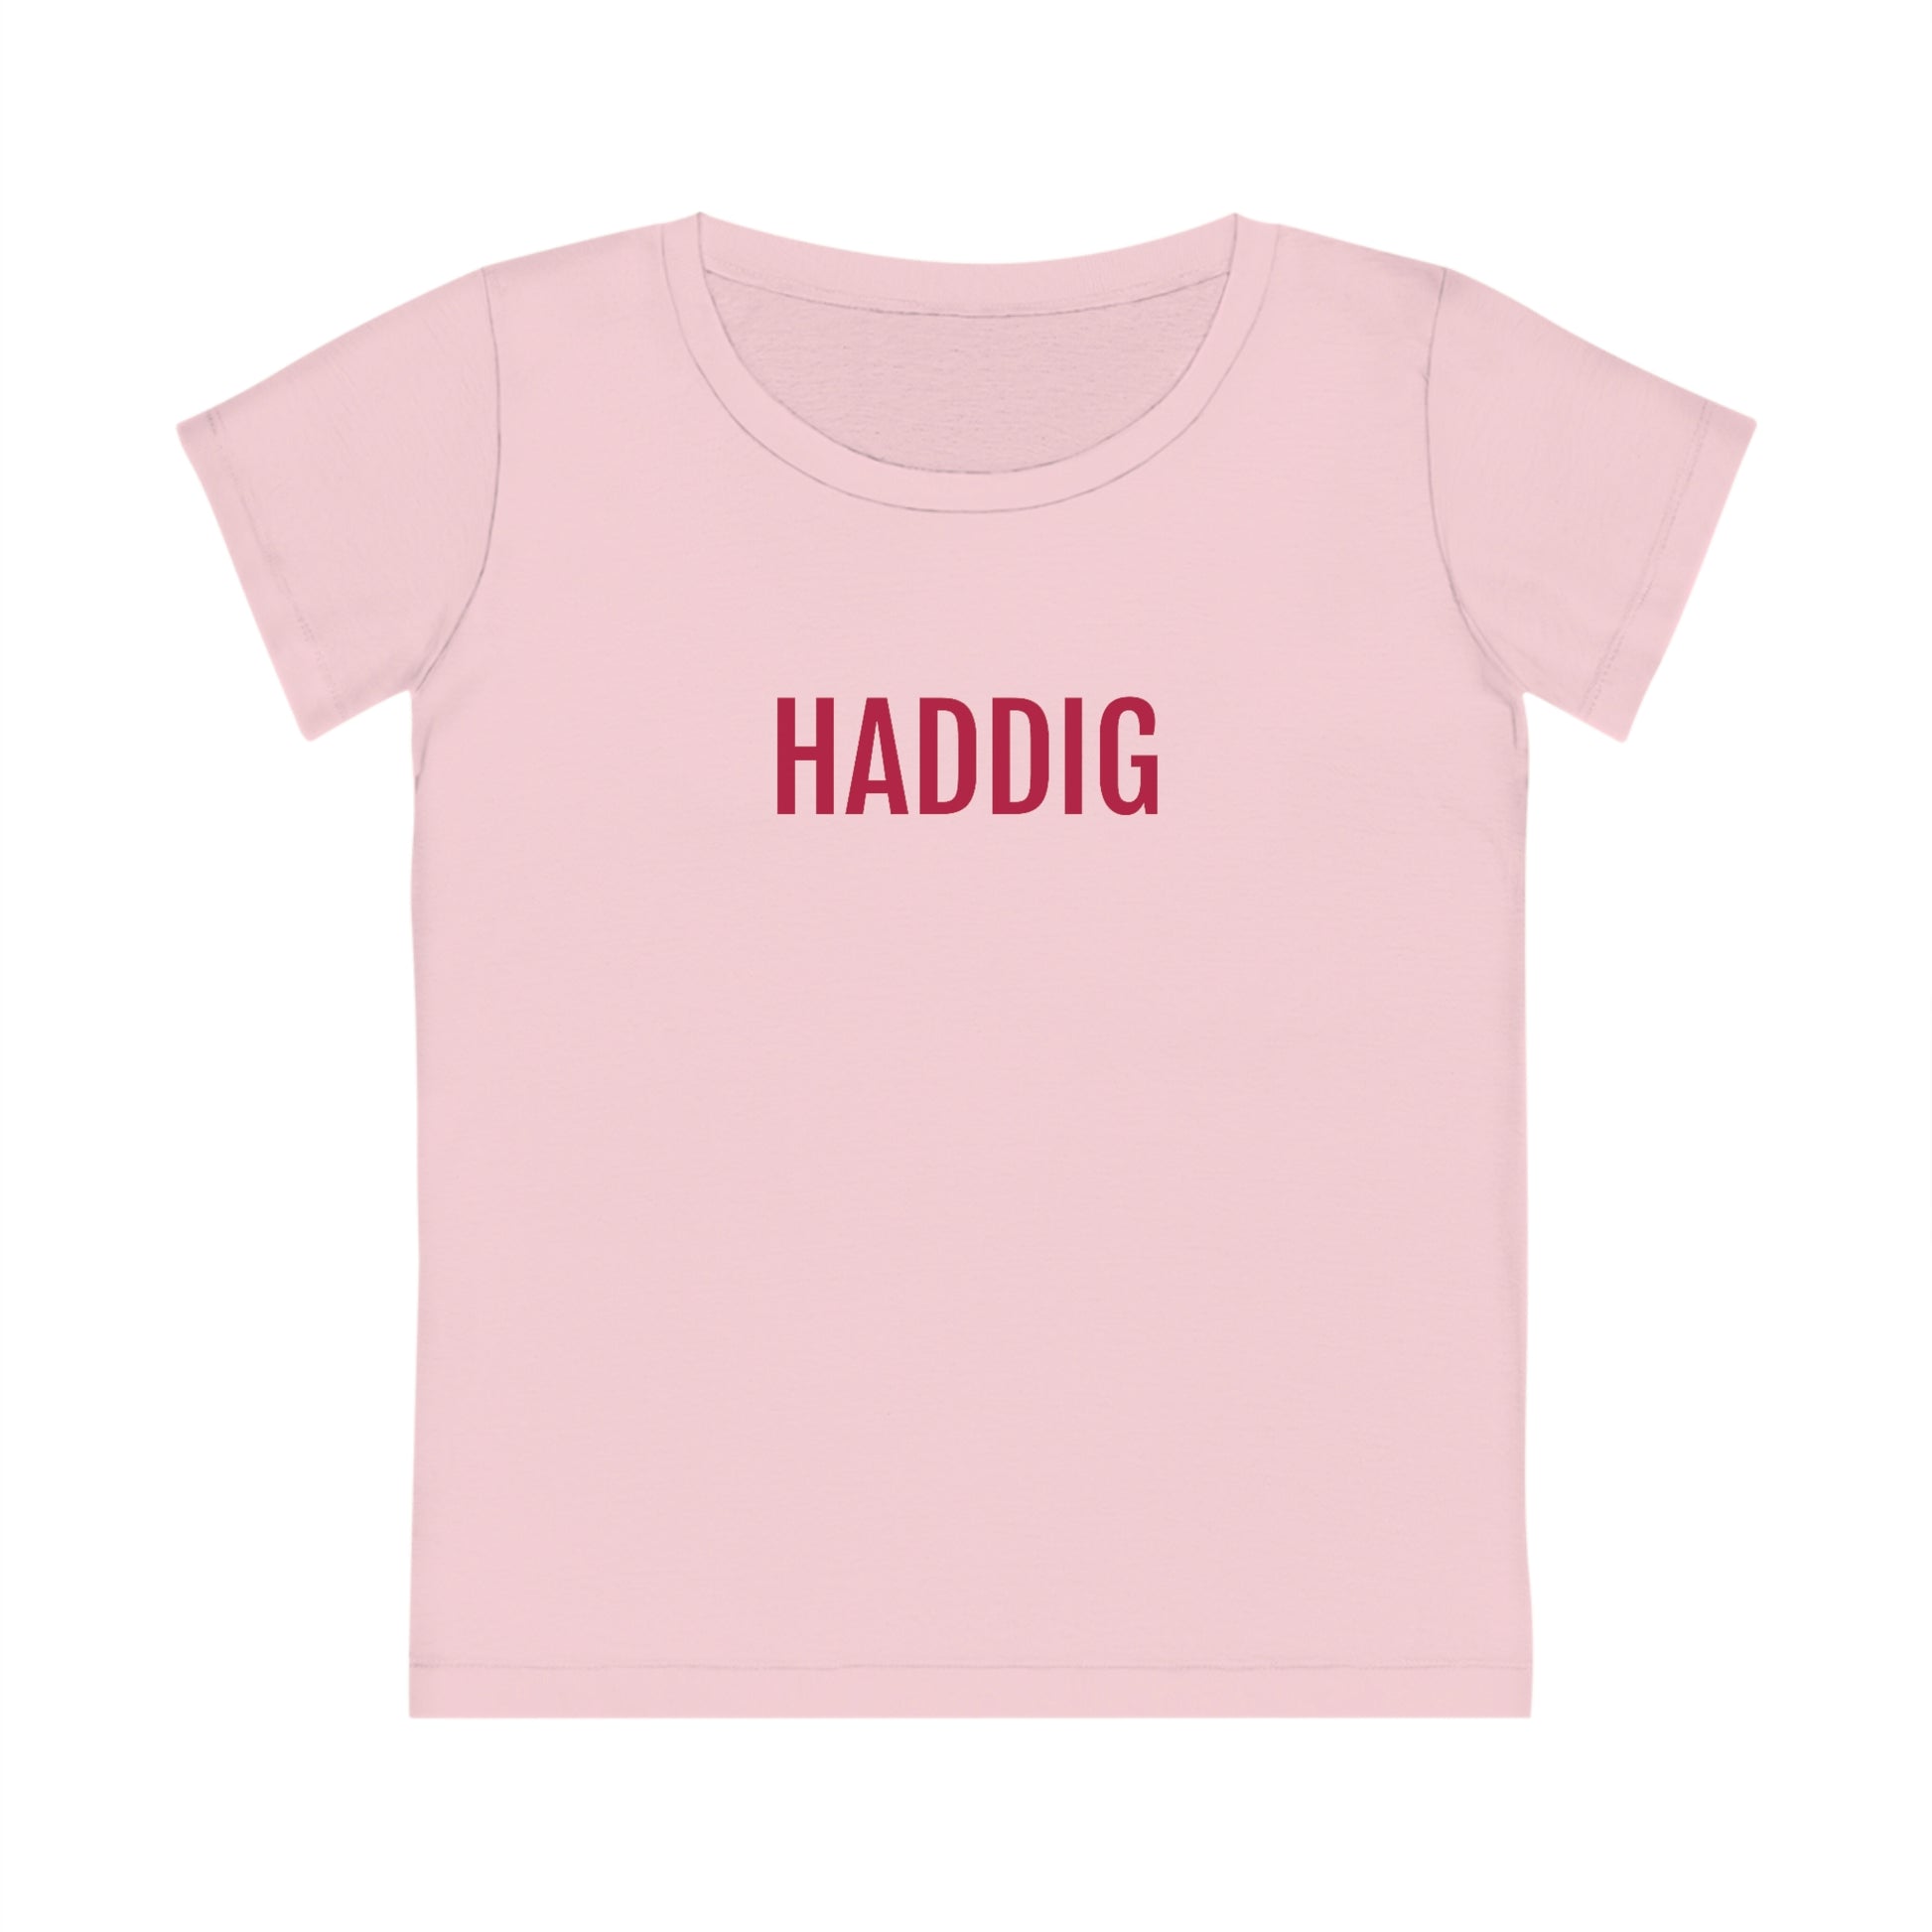 HADDIG | Dames T-Shirt uit Limburg